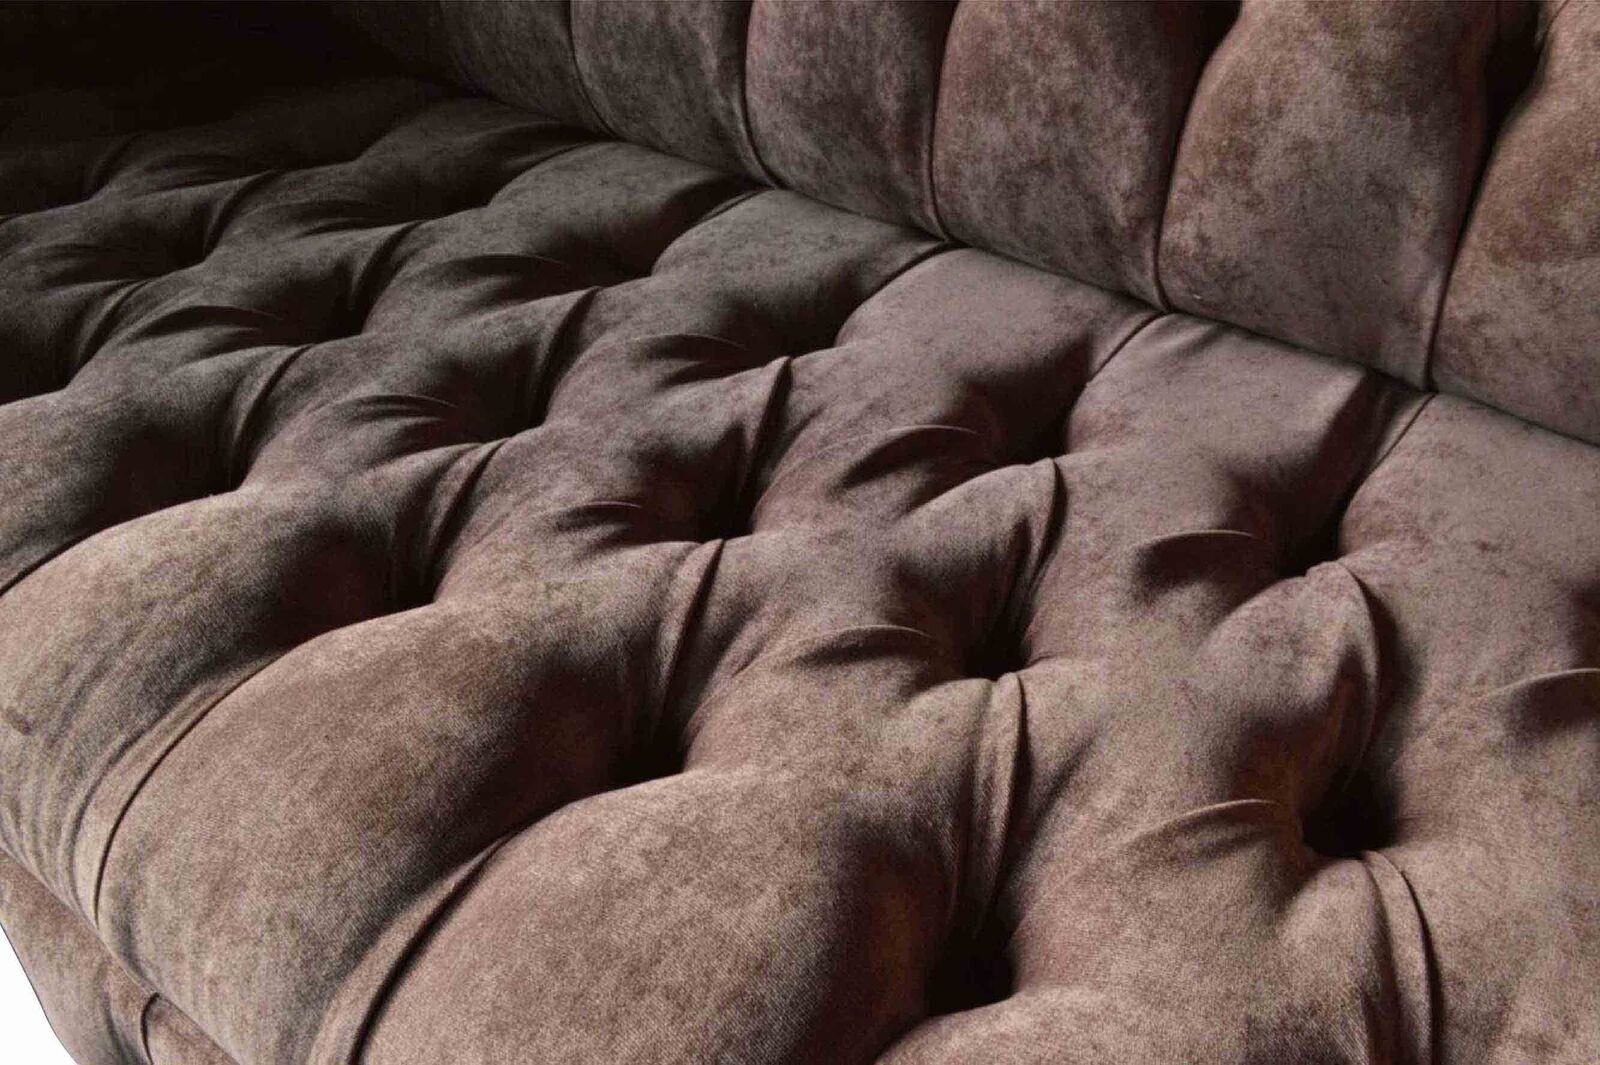 Sitzer 3 Lila, JVmoebel Sofas In Sofa Made Couch Polster Design Dreisitzer Europe Sofa Chesterfield